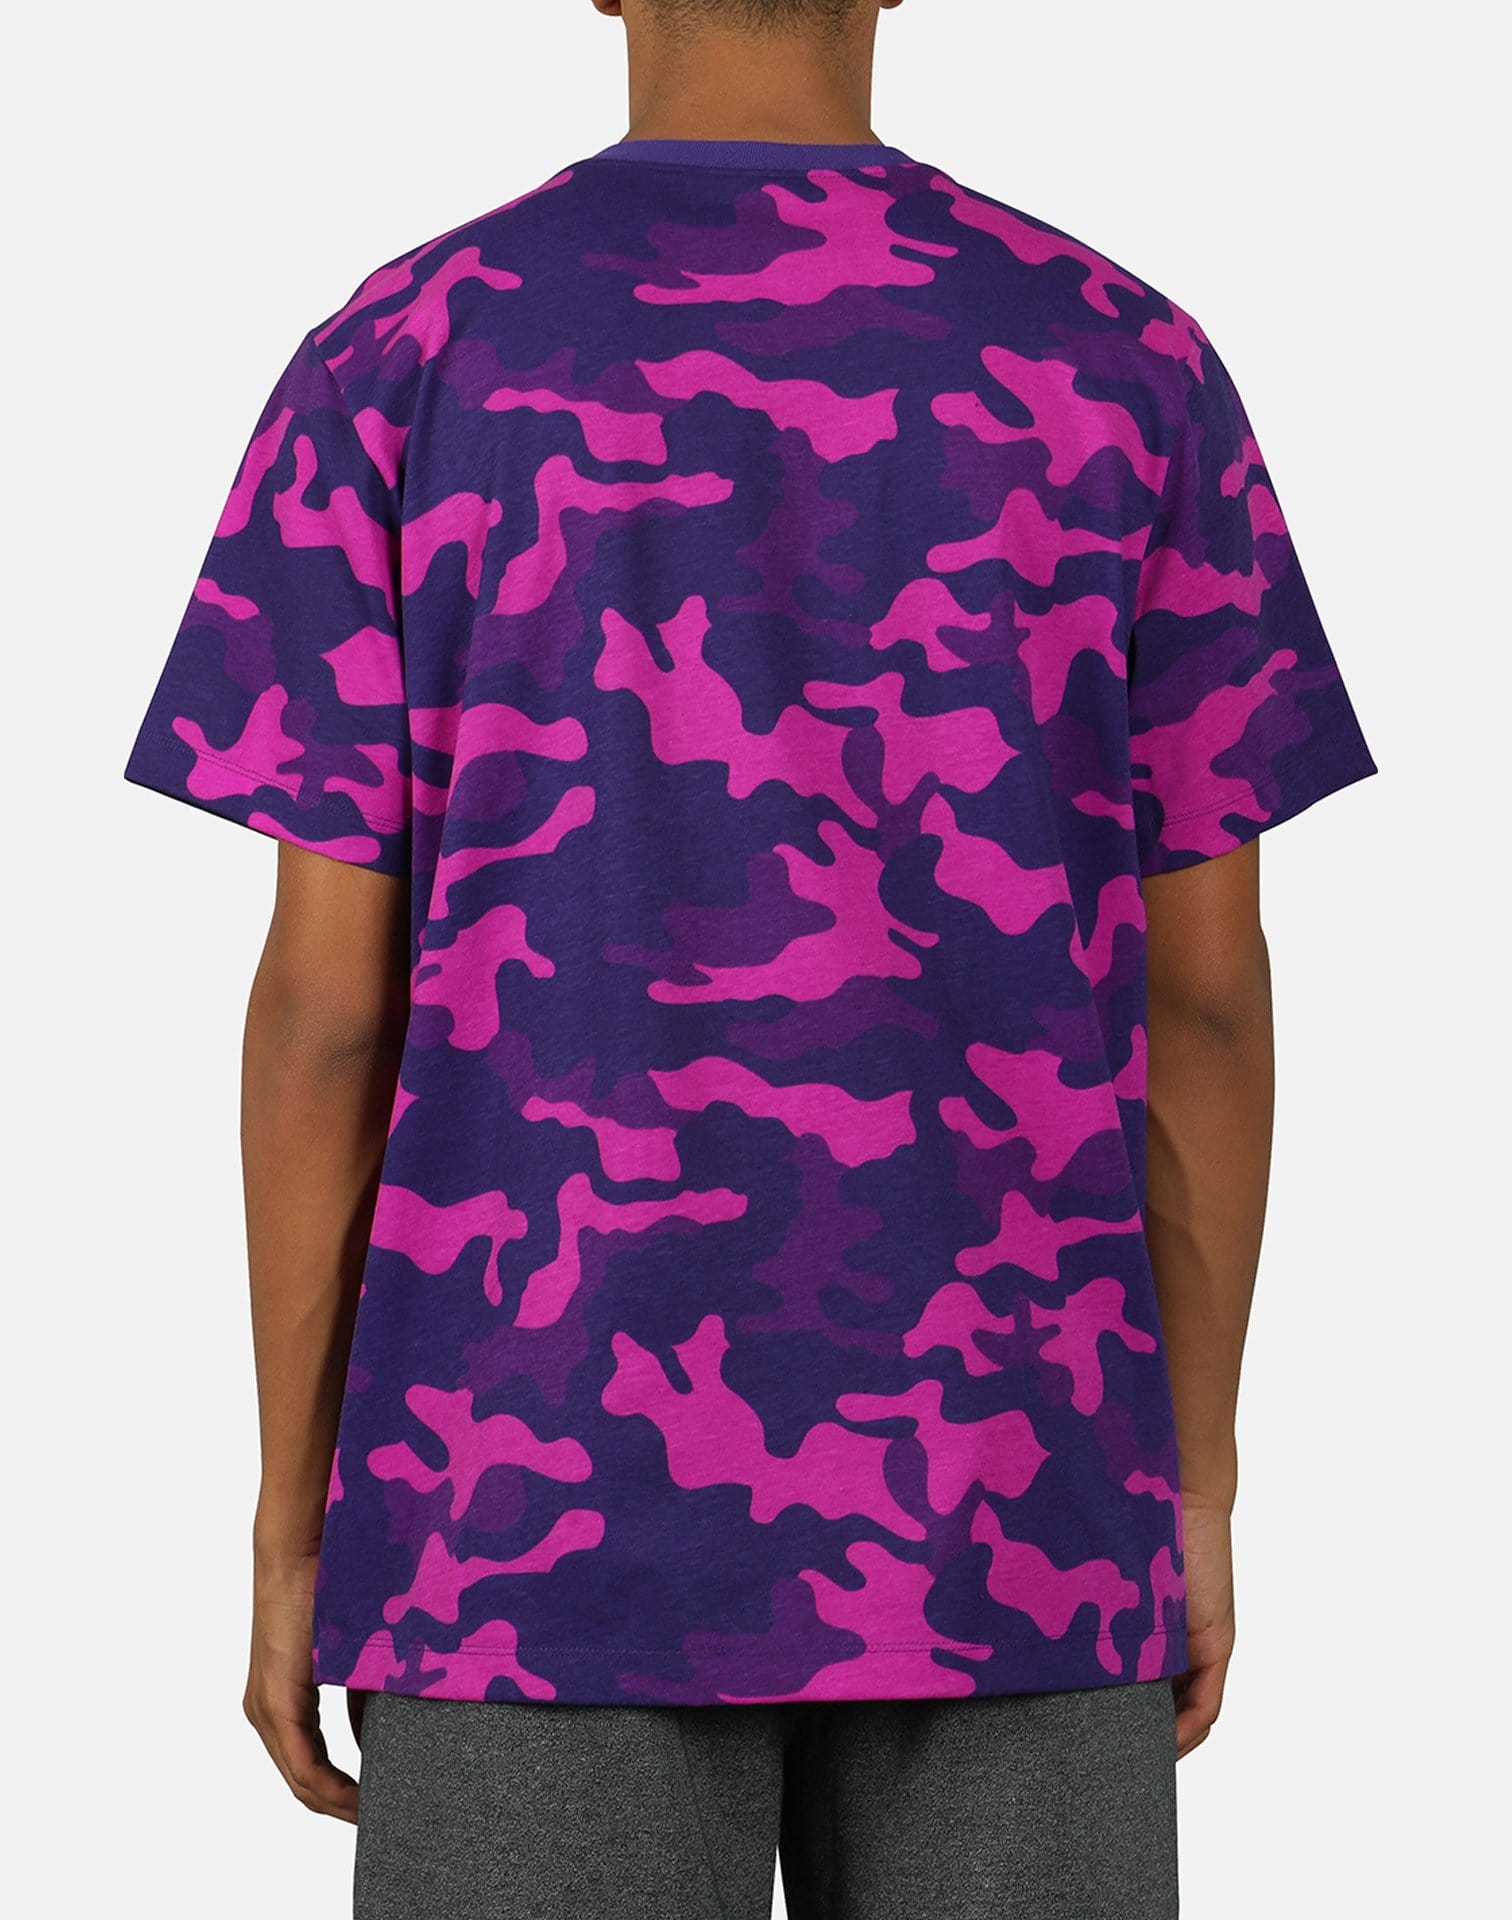 nike purple camo shirt